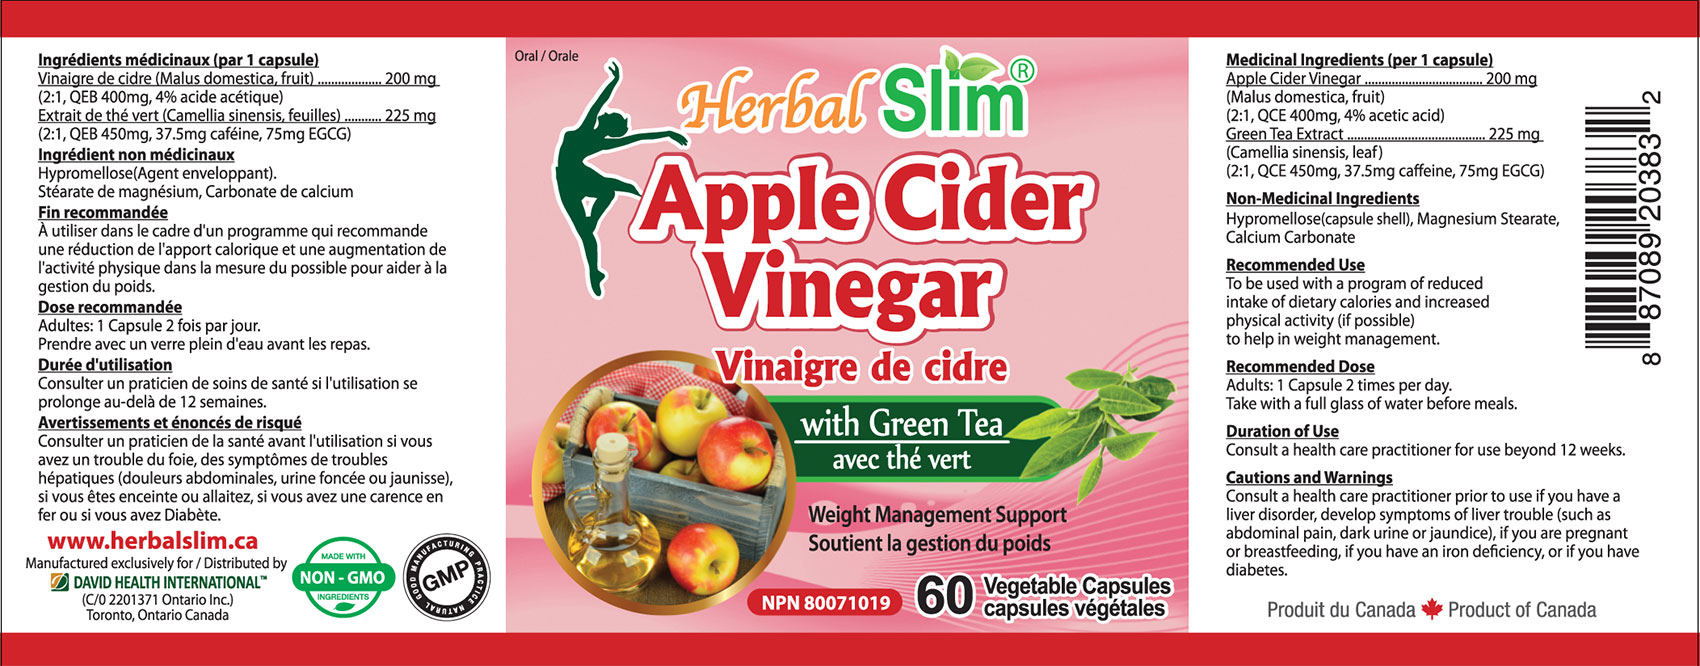 HerbalSlim Apple cider VIinegar with Green Tea